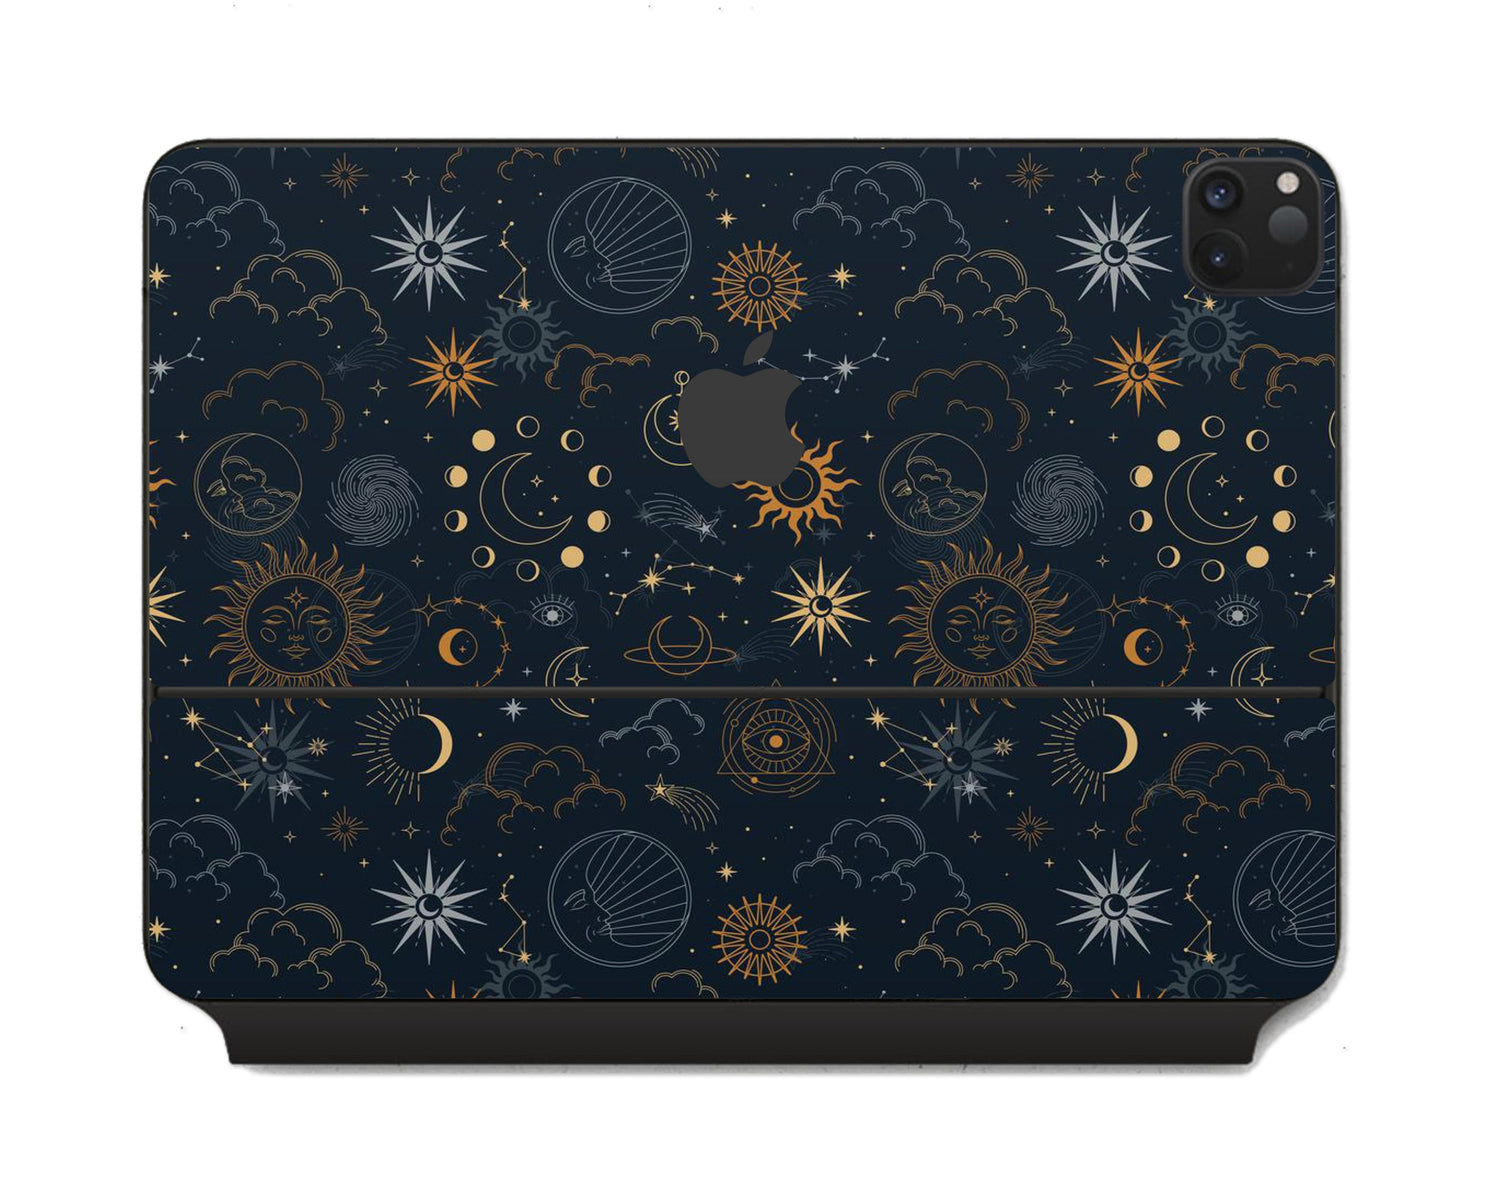 Lux Skins Magic Keyboard Constellation Stargazing Night iPad Pro 12.9" Skins - Pattern Galaxy Skin